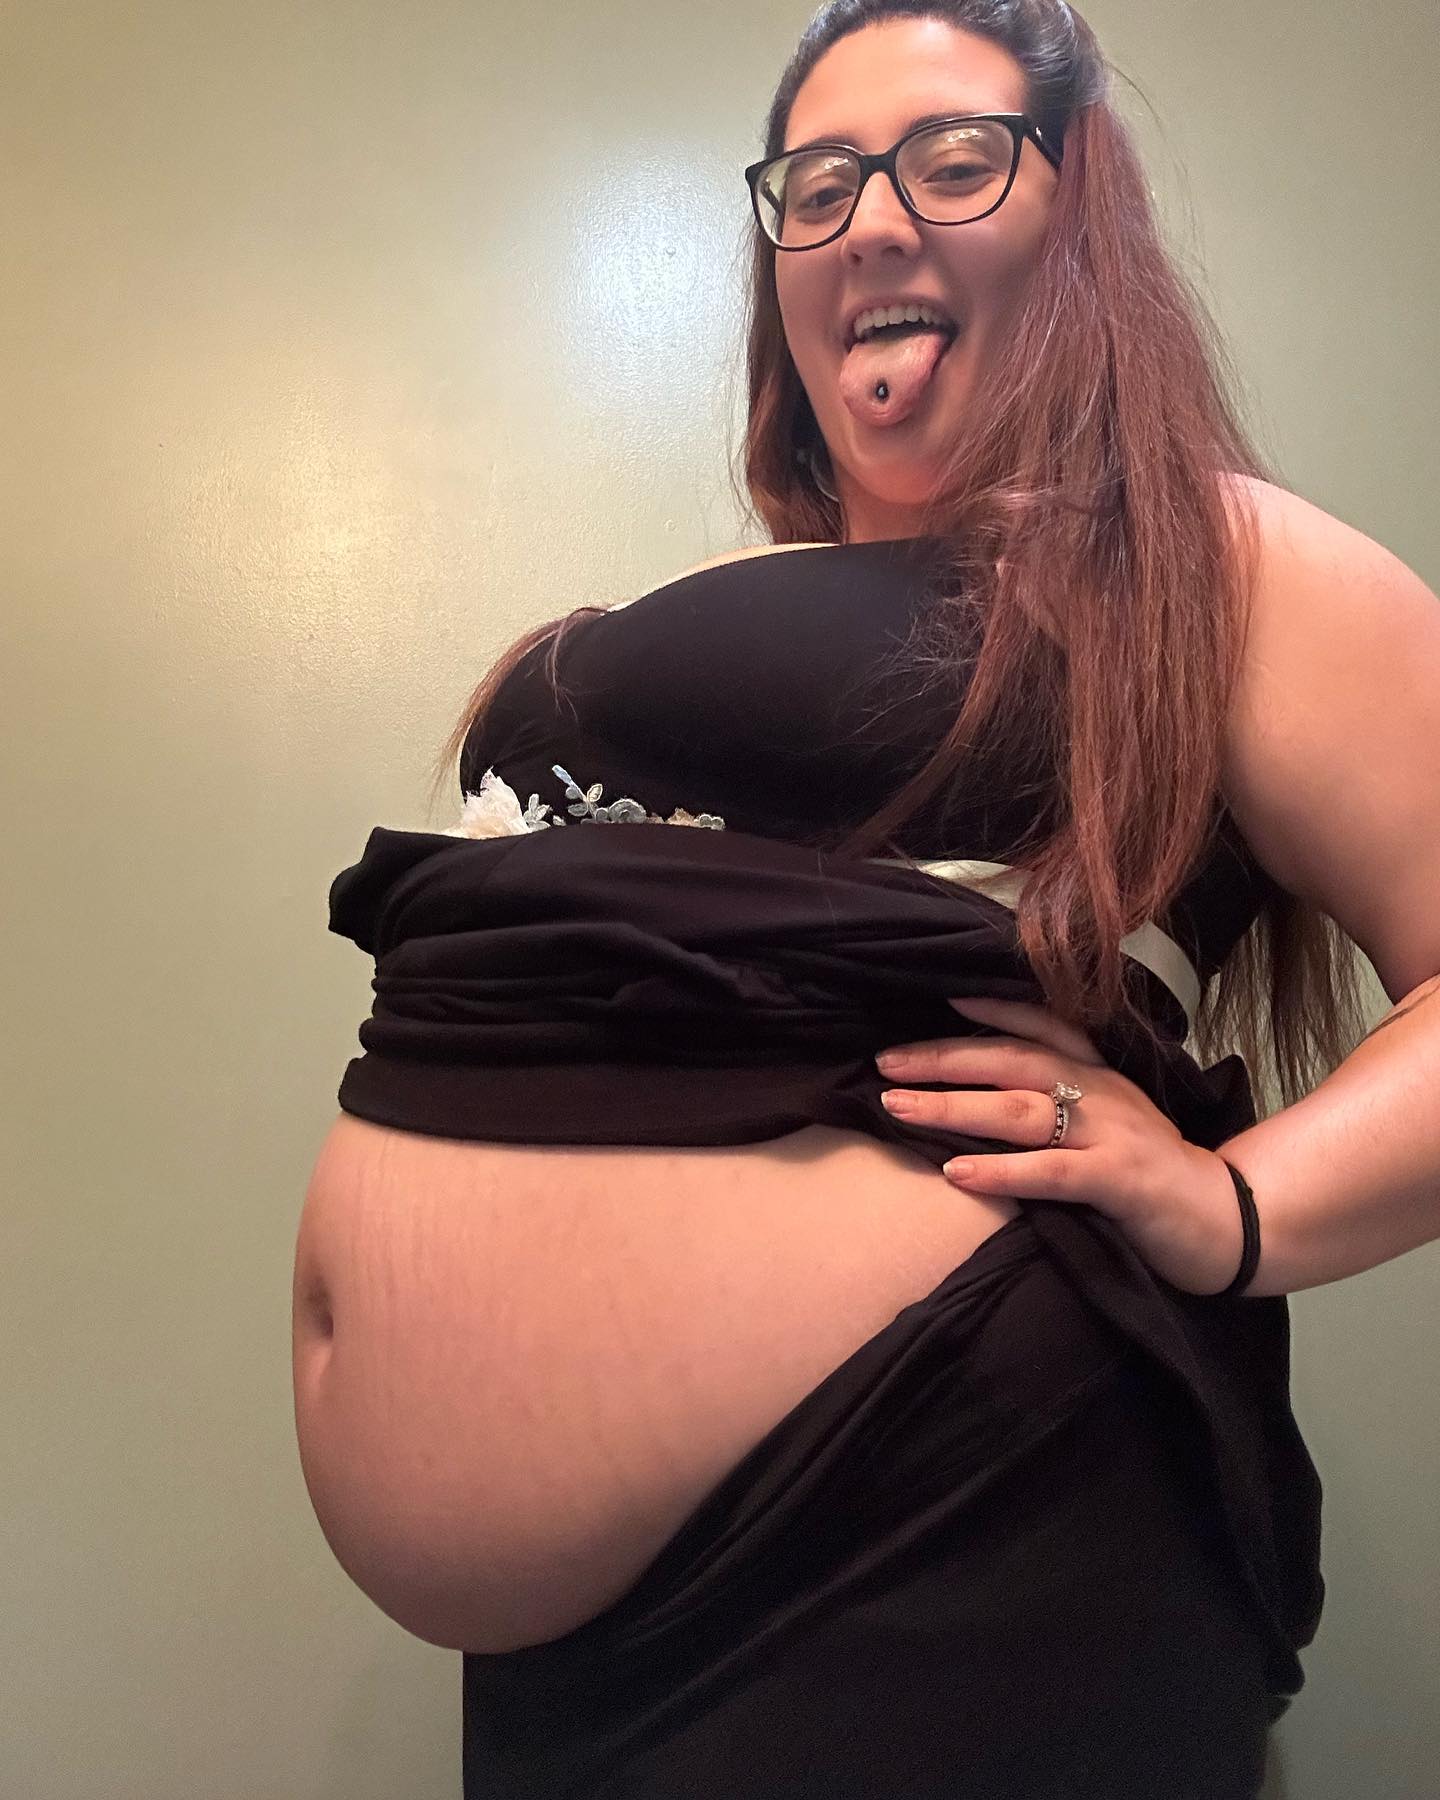 33 weeks pregnant today 😝💦 

#bbw #pregnant #preggo #pregnancyfetish #thick #curvy #findomgoddess #sugarbabys #pregnancy #chubby